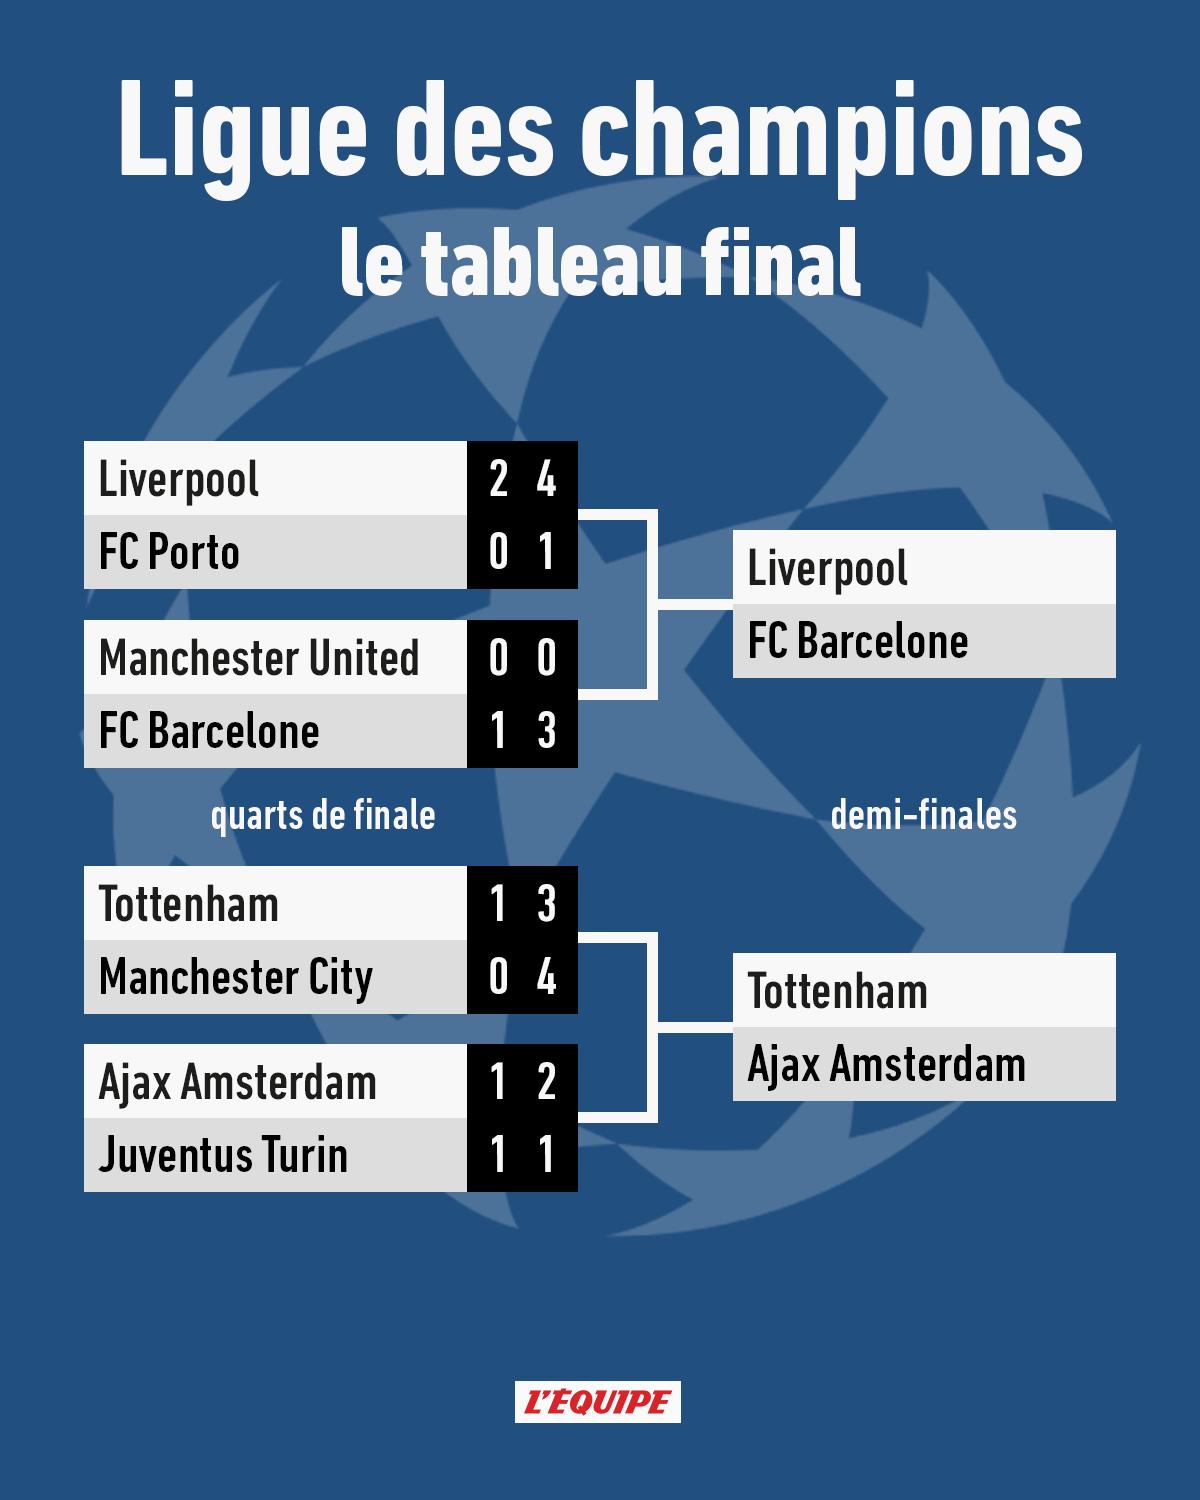 Due Kedelig vandtæt L'ÉQUIPE on Twitter: "Les demi-finales de la Ligue des champions 2018-2019  : 🏴󠁧󠁢󠁥󠁮󠁧󠁿 Liverpool vs 🇪🇸 FC Barcelone 🏴󠁧󠁢󠁥󠁮󠁧󠁿 Tottenham vs  🇳🇱 Ajax Amsterdam #UCL https://t.co/15bvgotYpF" / Twitter